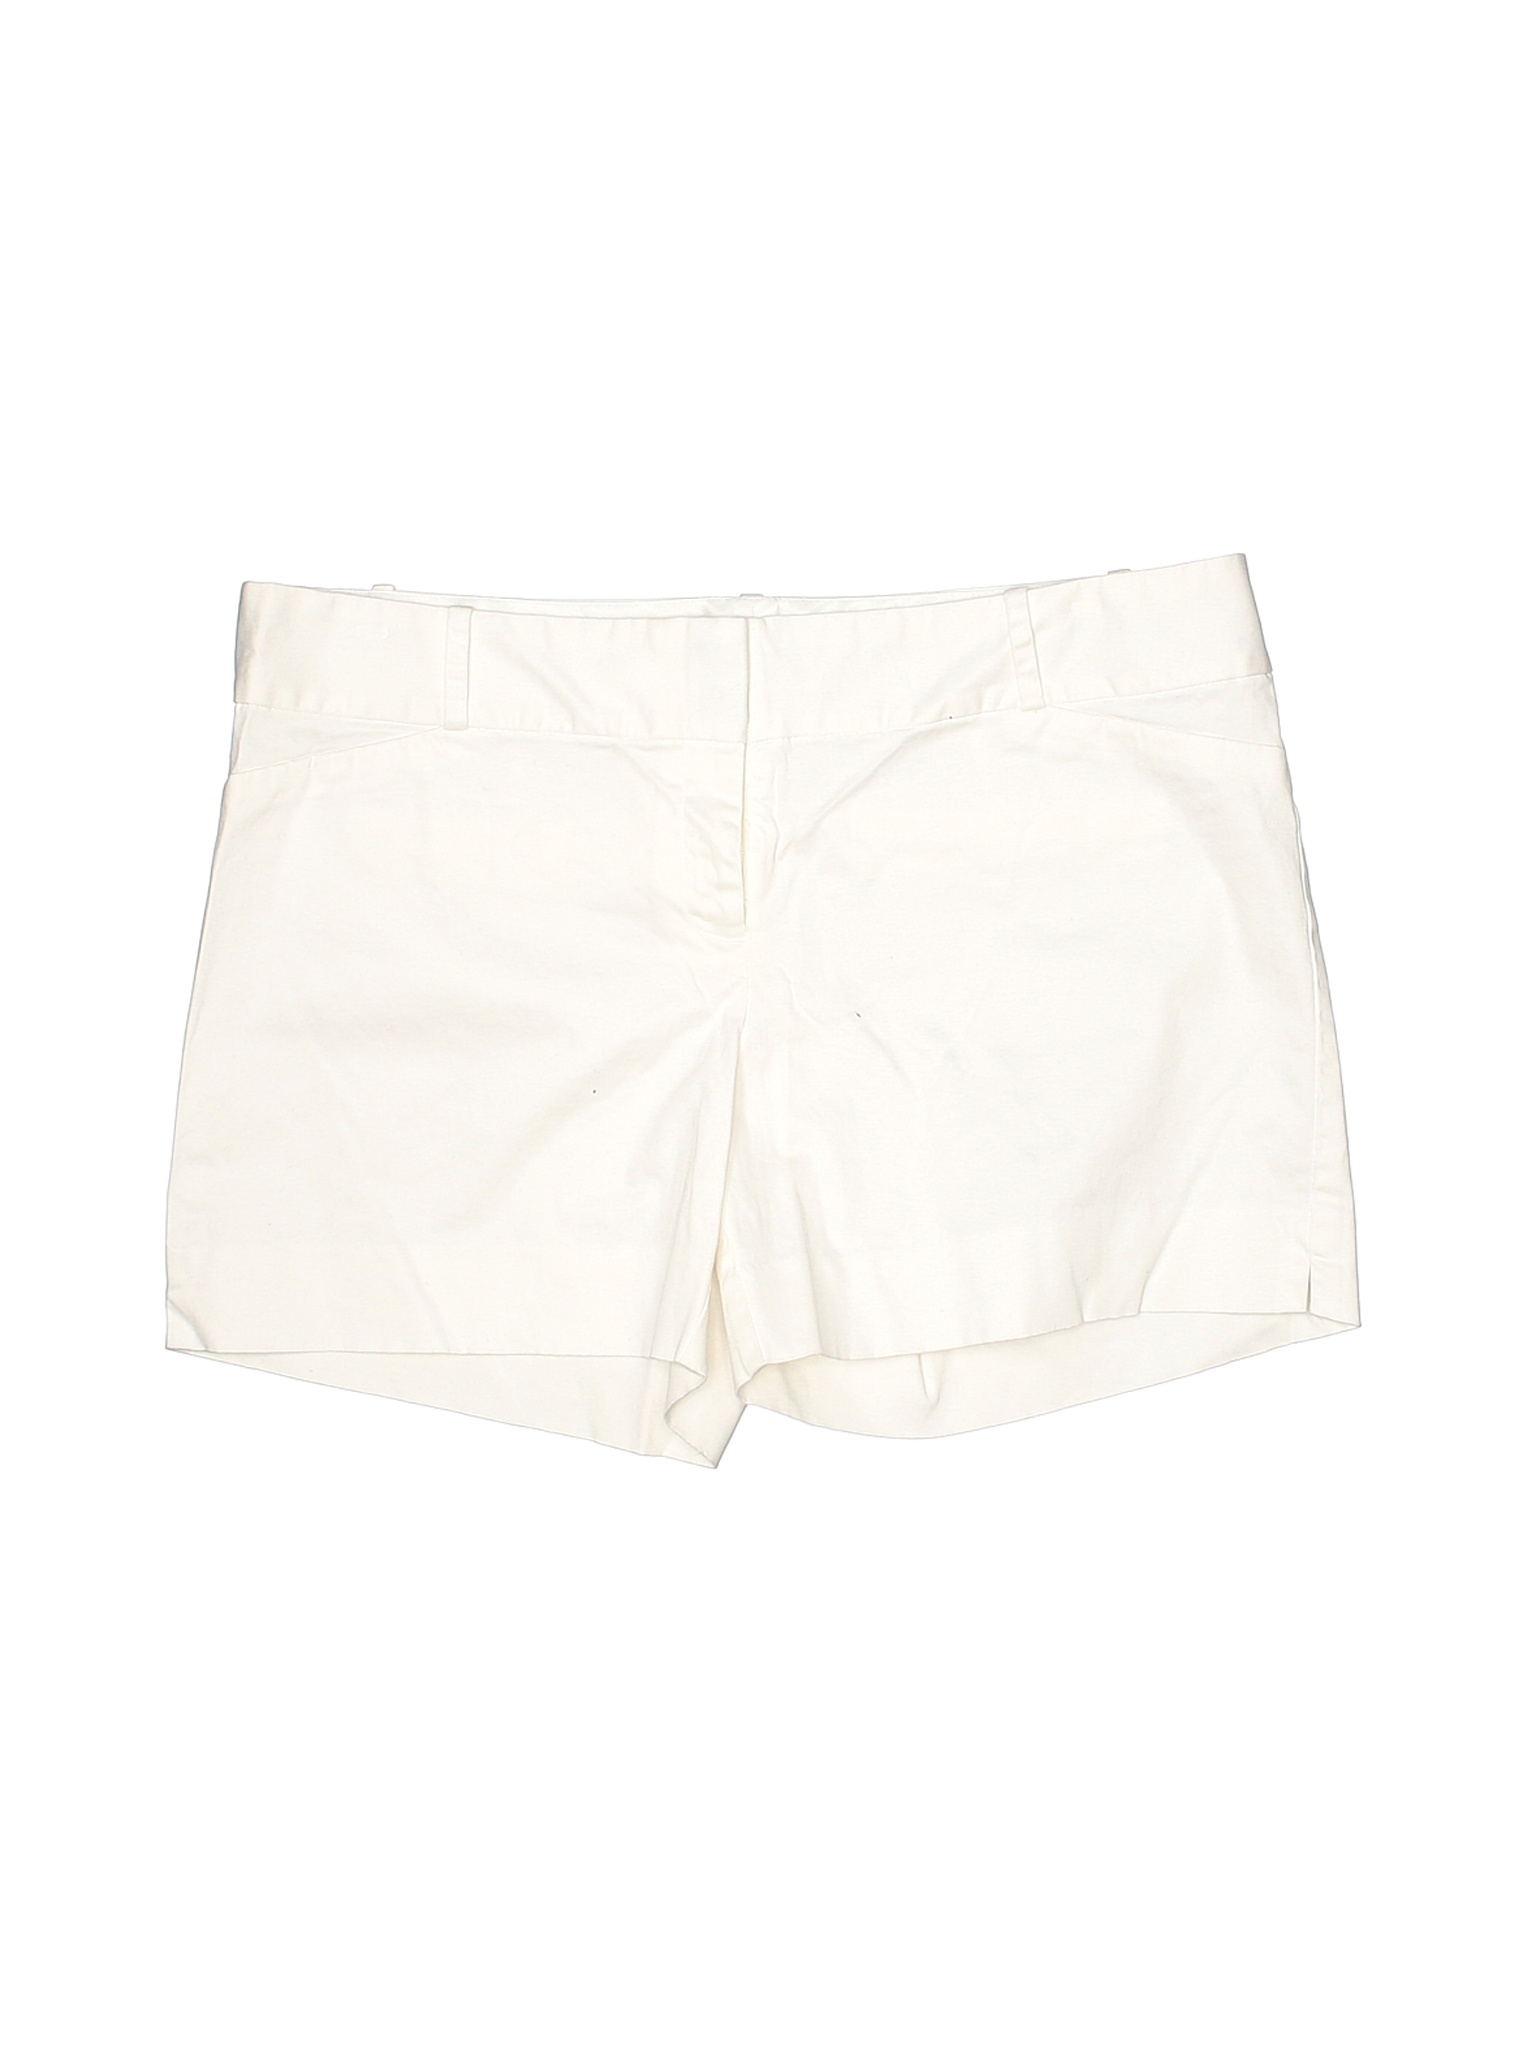 The Limited Women White Shorts 14 | eBay